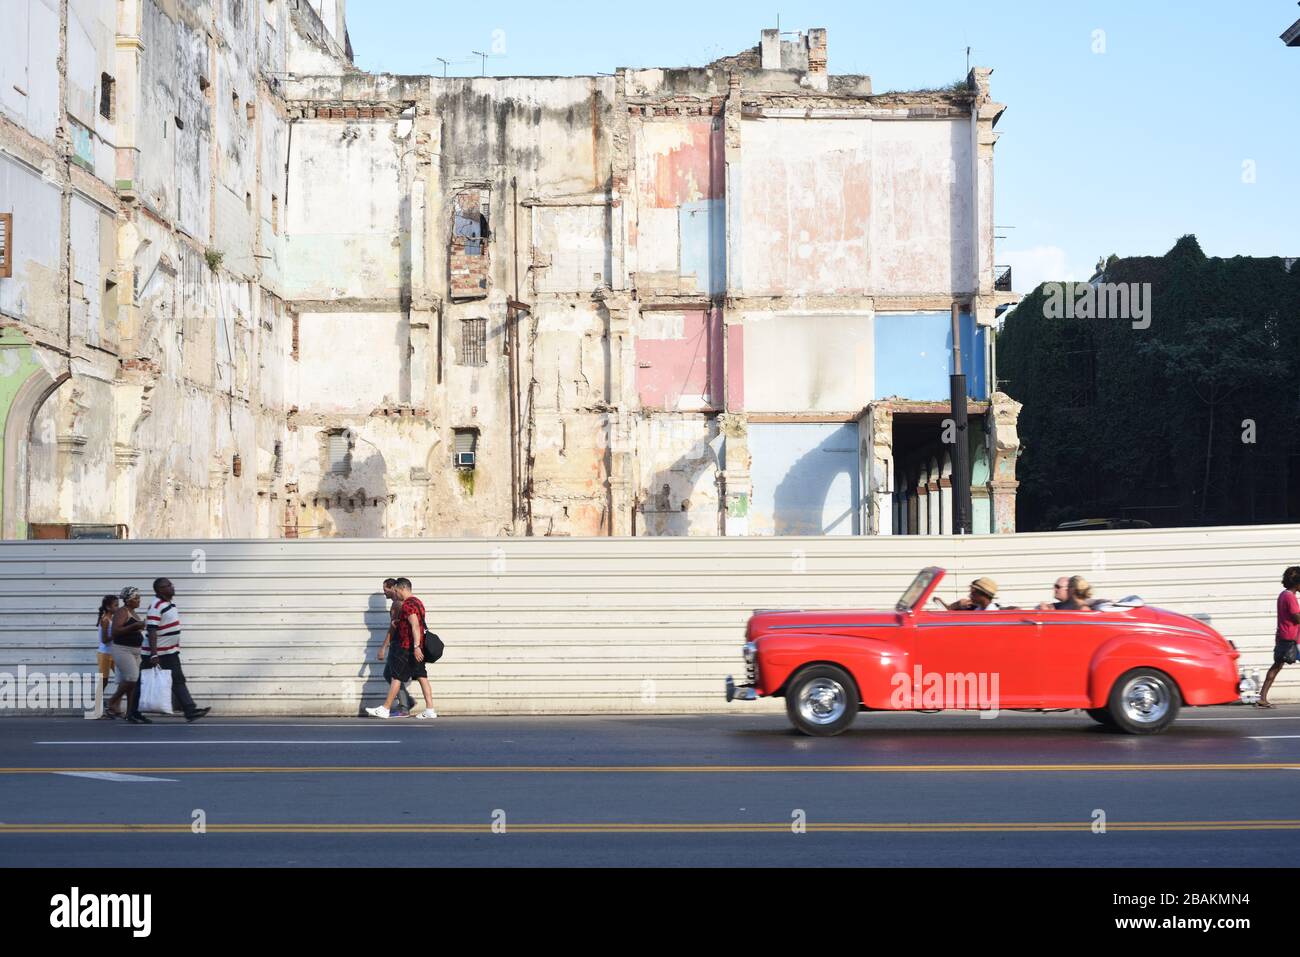 Personas, coche, edificio demolido, calle, 2014, Cuba Foto de stock